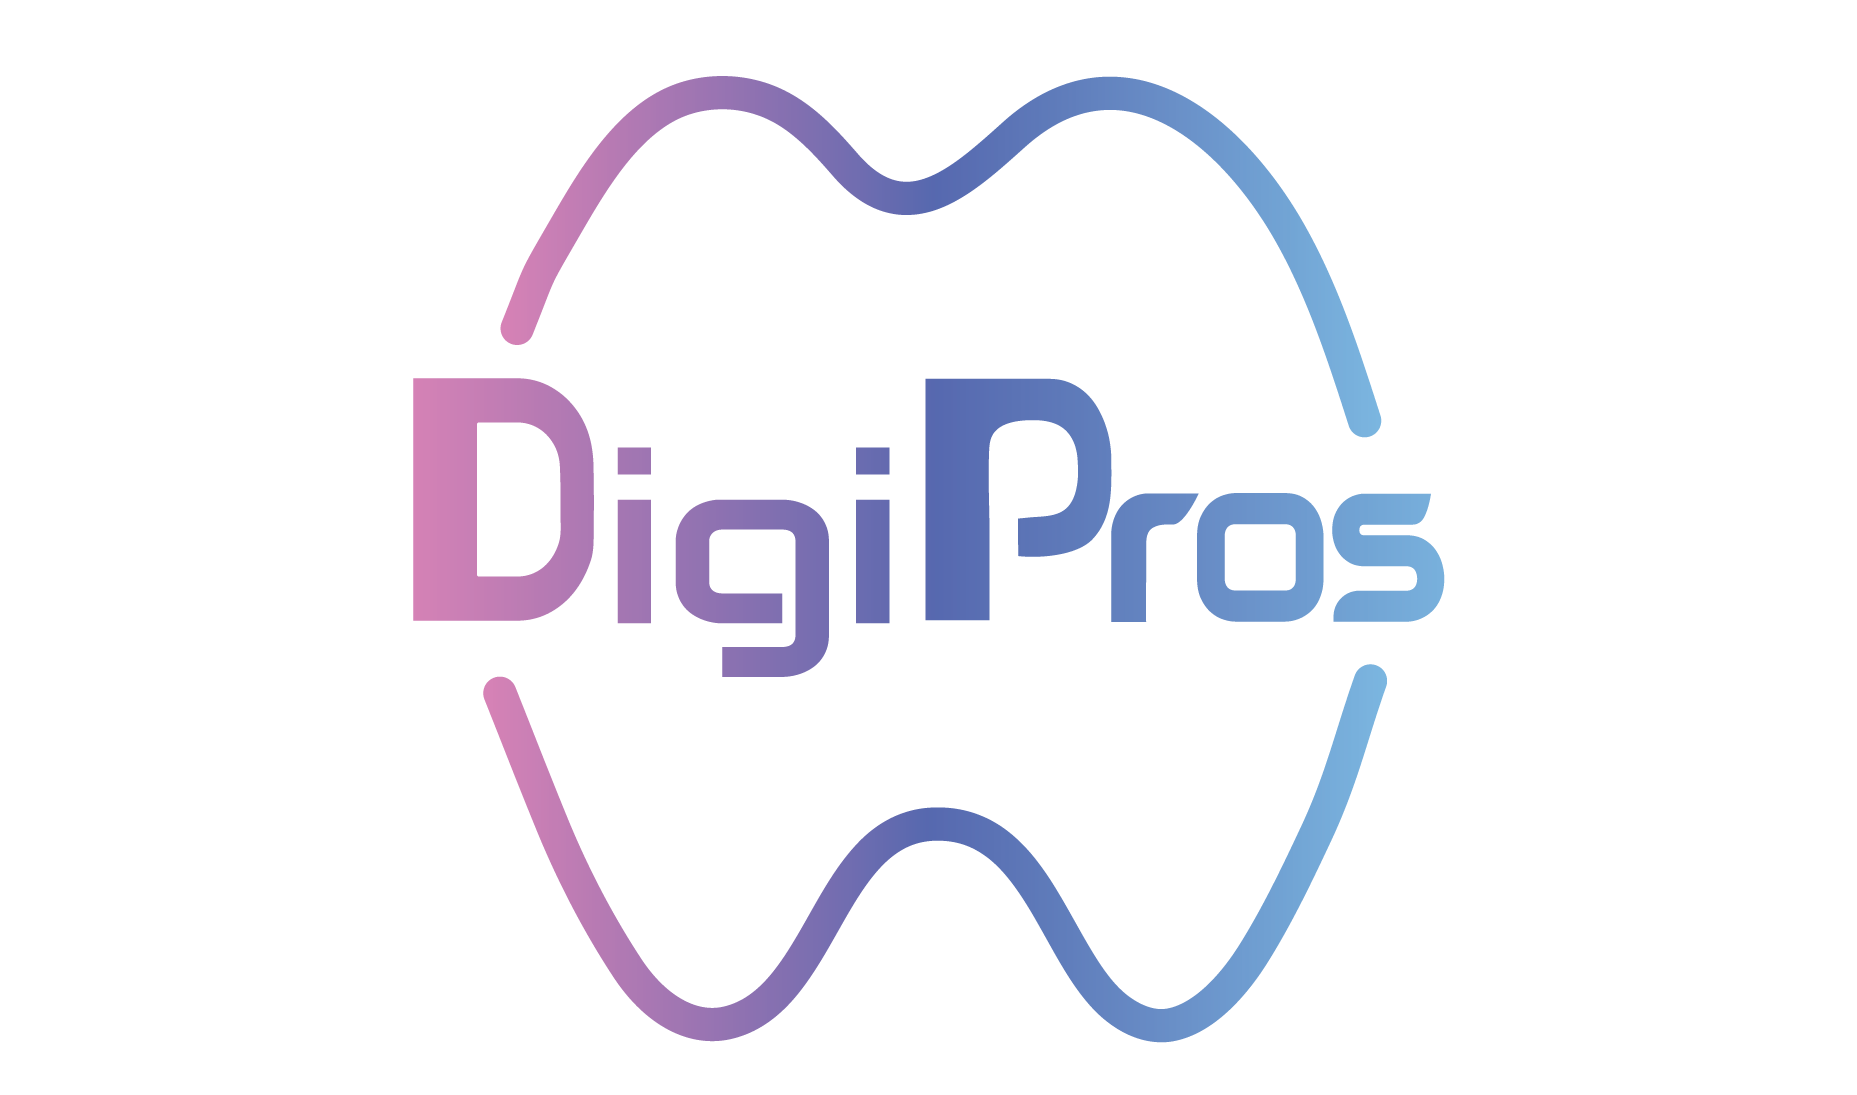 DigiPros Dental Laboratory